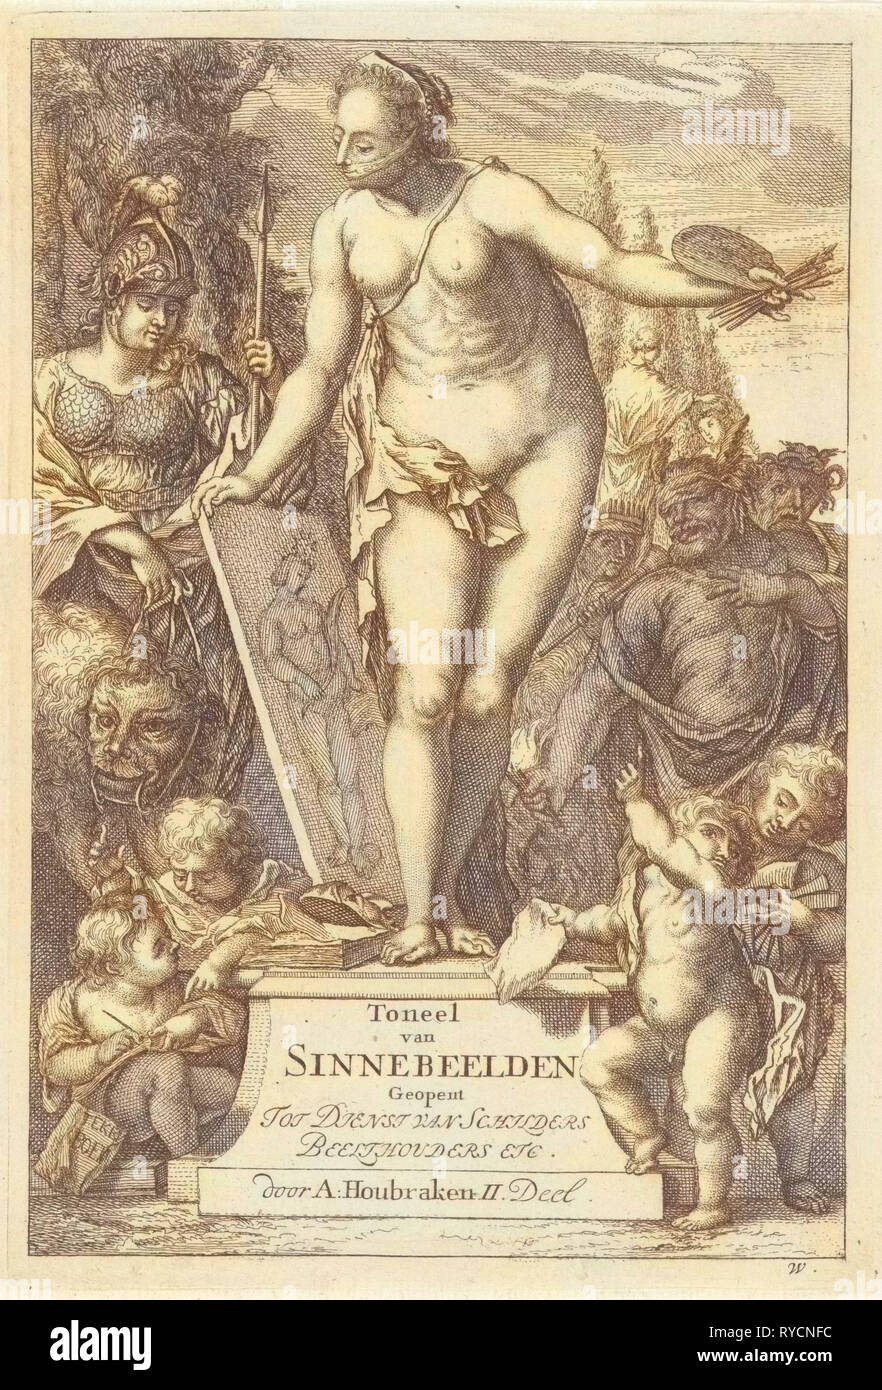 Personificazione della pittura su un piedistallo, Arnold Houbraken, Nicolaes de Vries, 1688 - 1700 Foto Stock